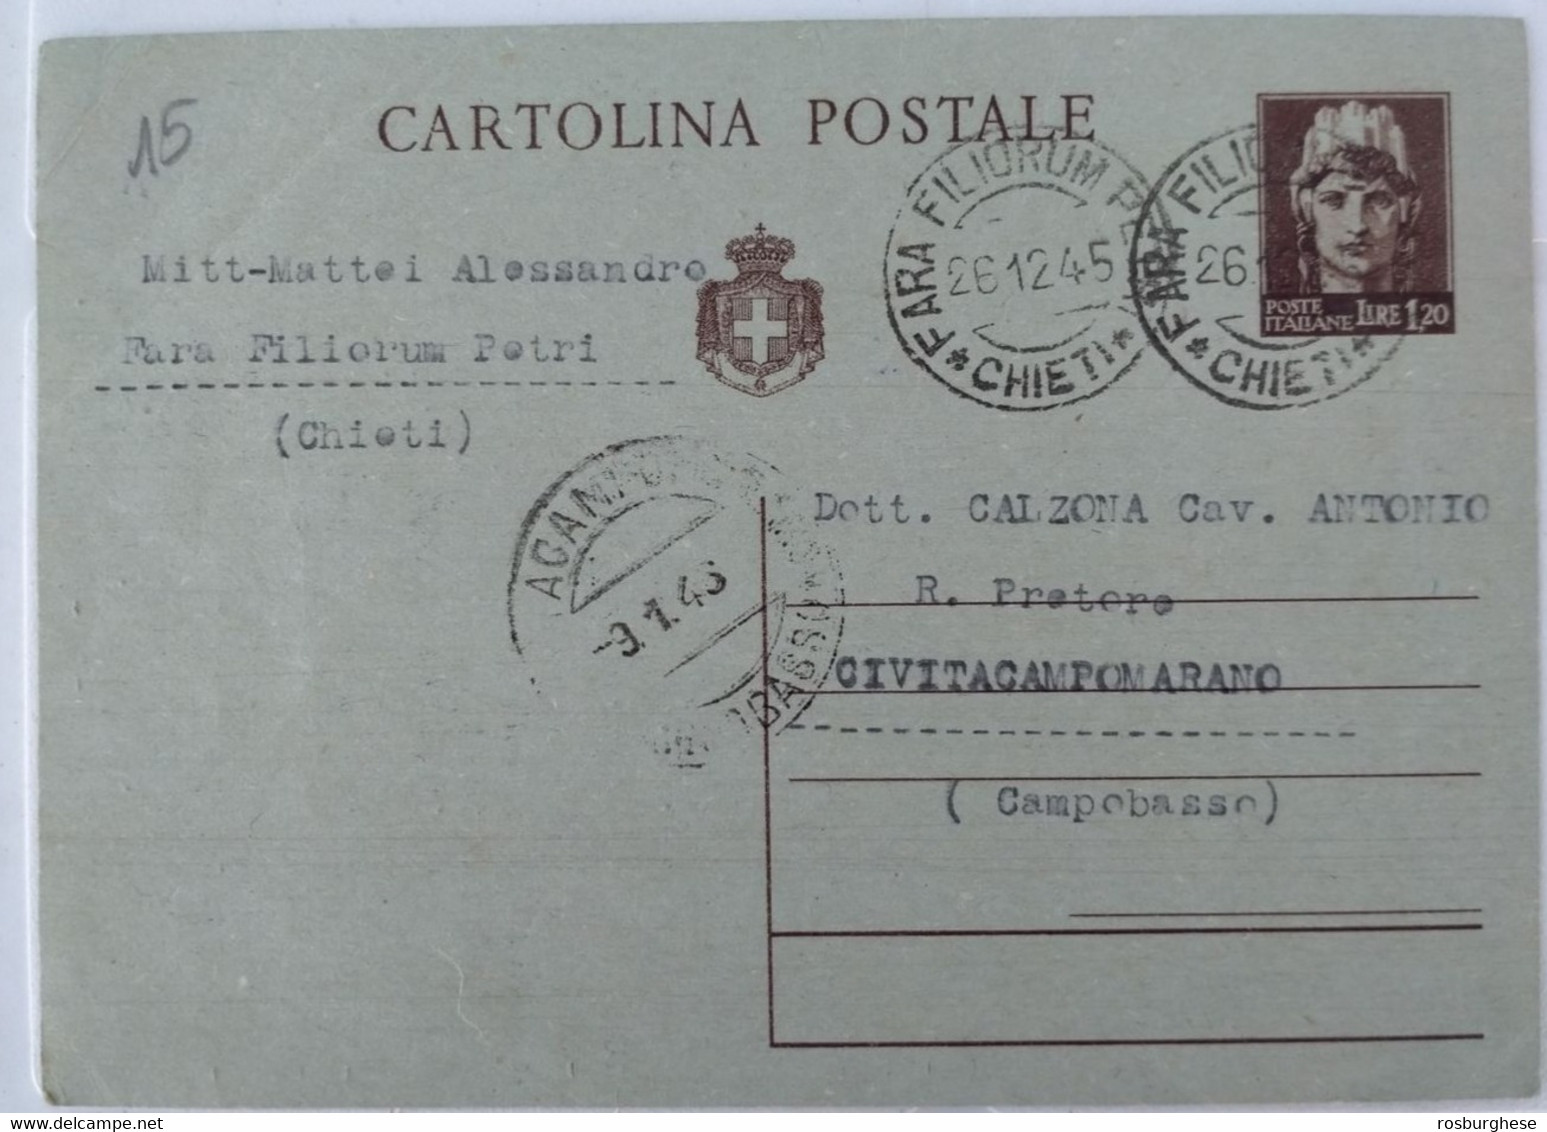 Cartolina Postale 1,20 Centesimi Annullo Fara Filiorum Petri Chieti Civitacampomarano VG 1945 - Interi Postali